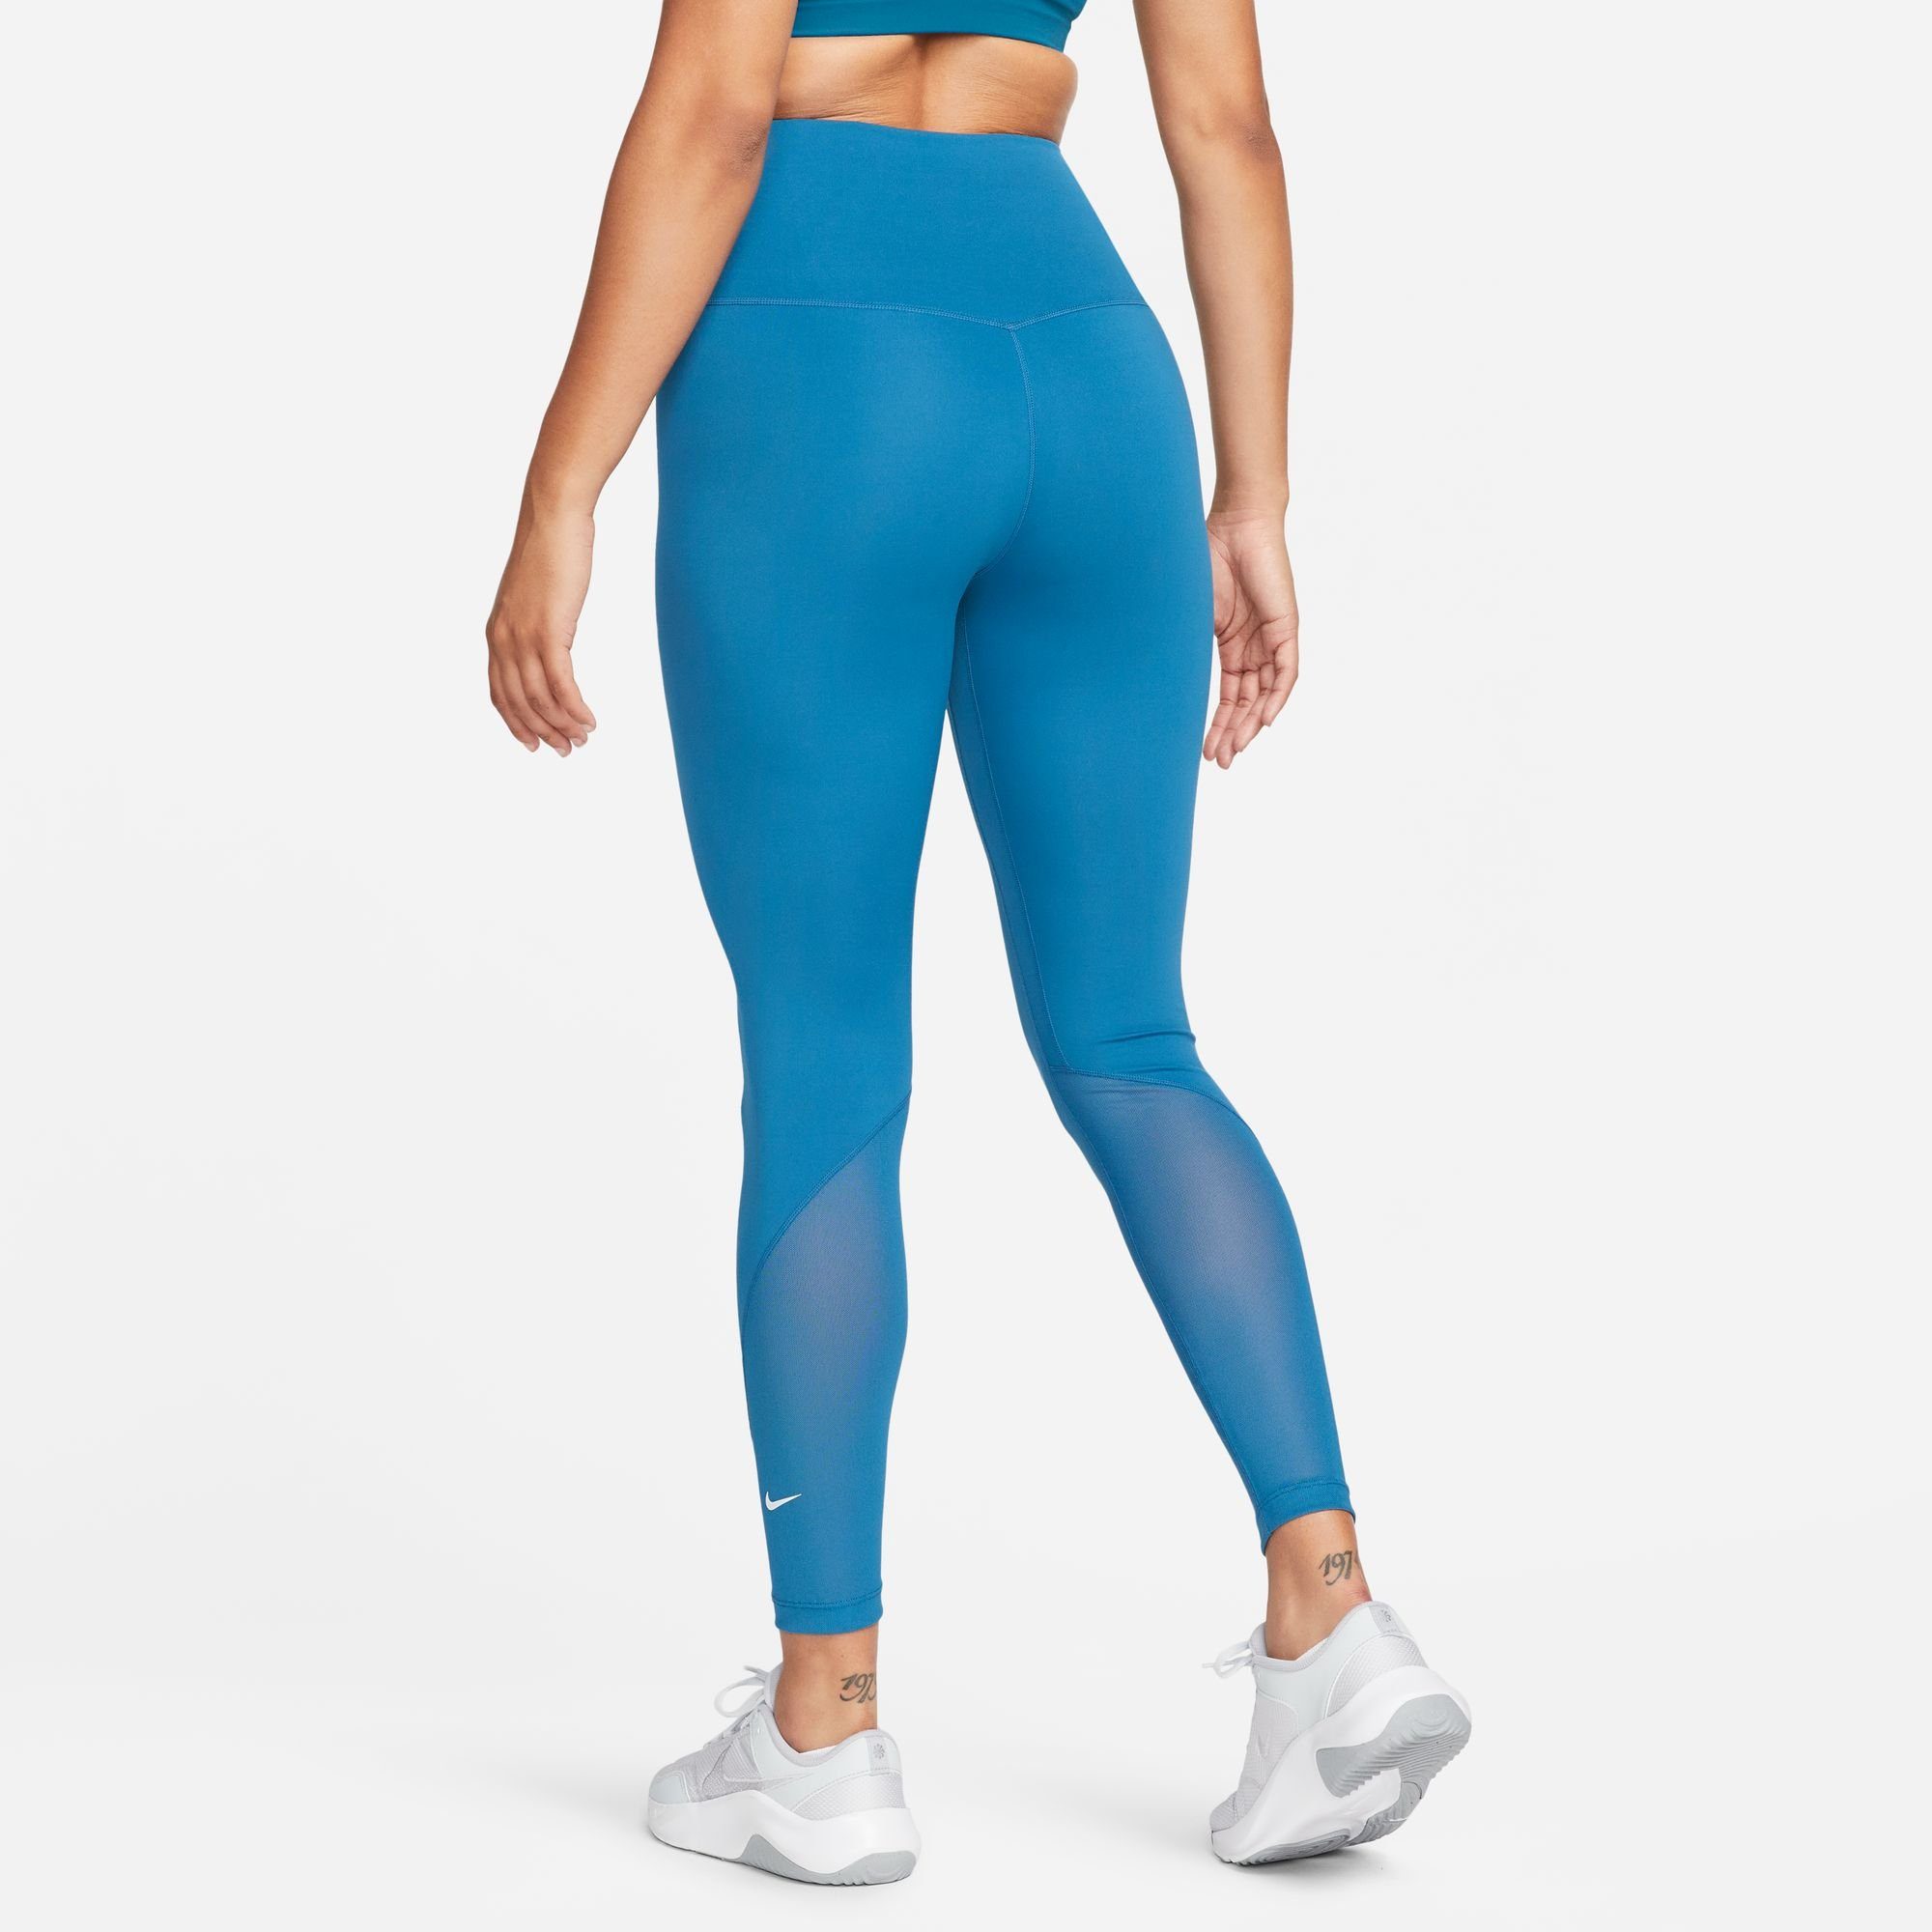 LEGGINGS HIGH-WAISTED INDUSTRIAL / BLUE/WHITE Trainingstights Nike WOMEN'S ONE